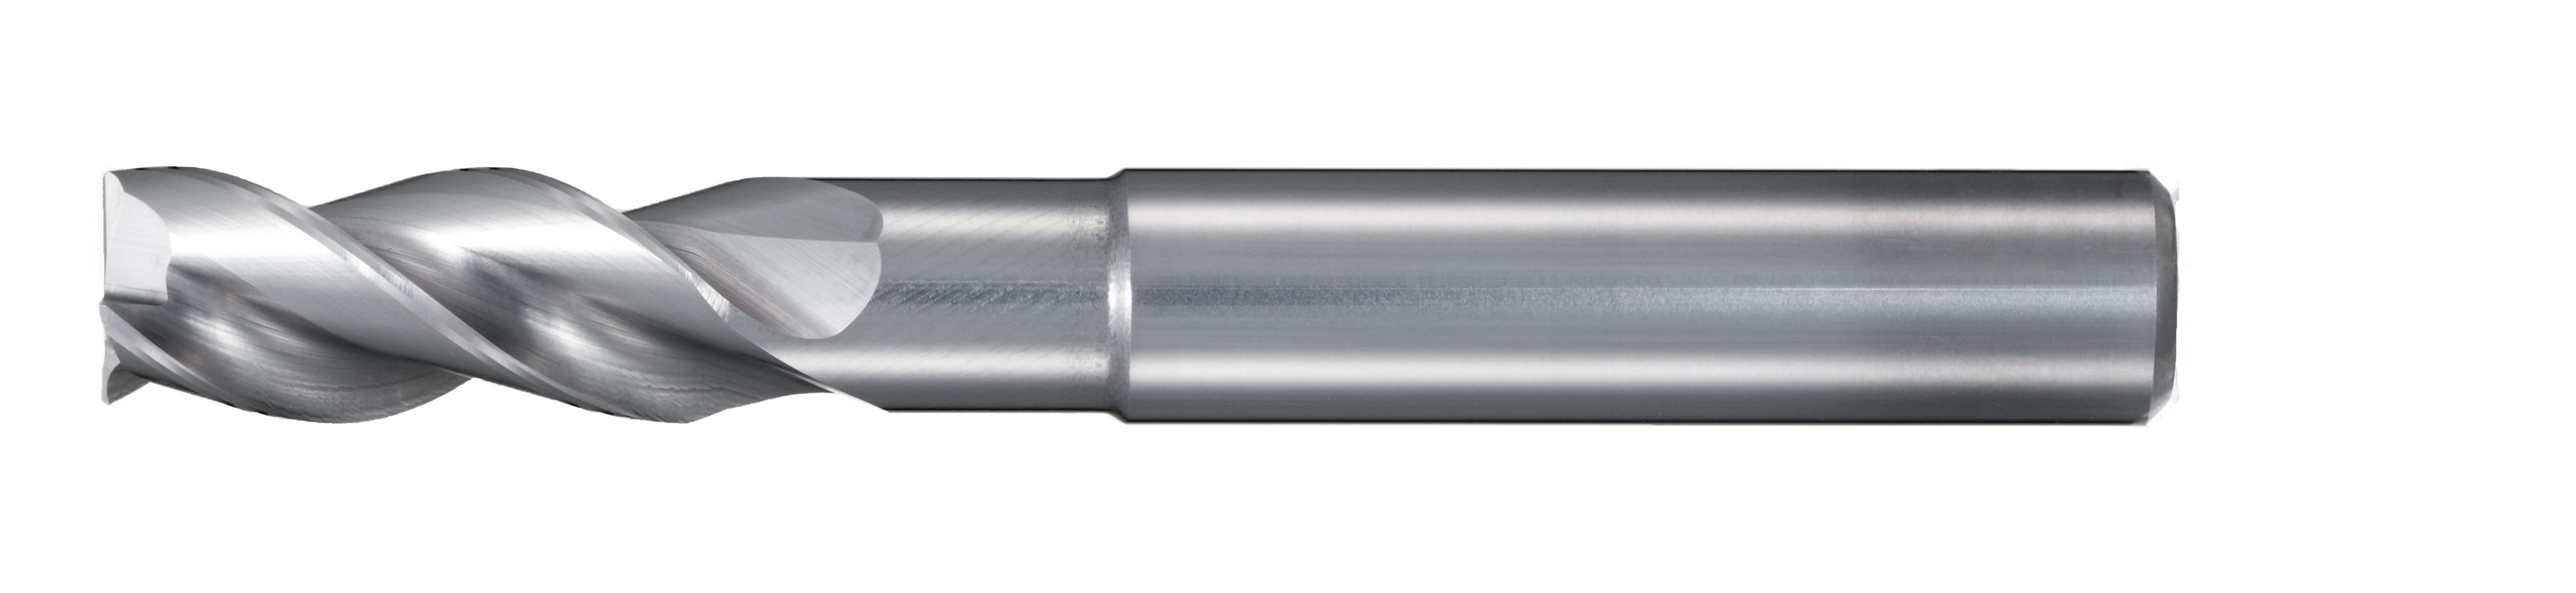 Fresa de extremo de plomo desigual, cuello largo, 3 flautas, para aluminio RF100 A 3473